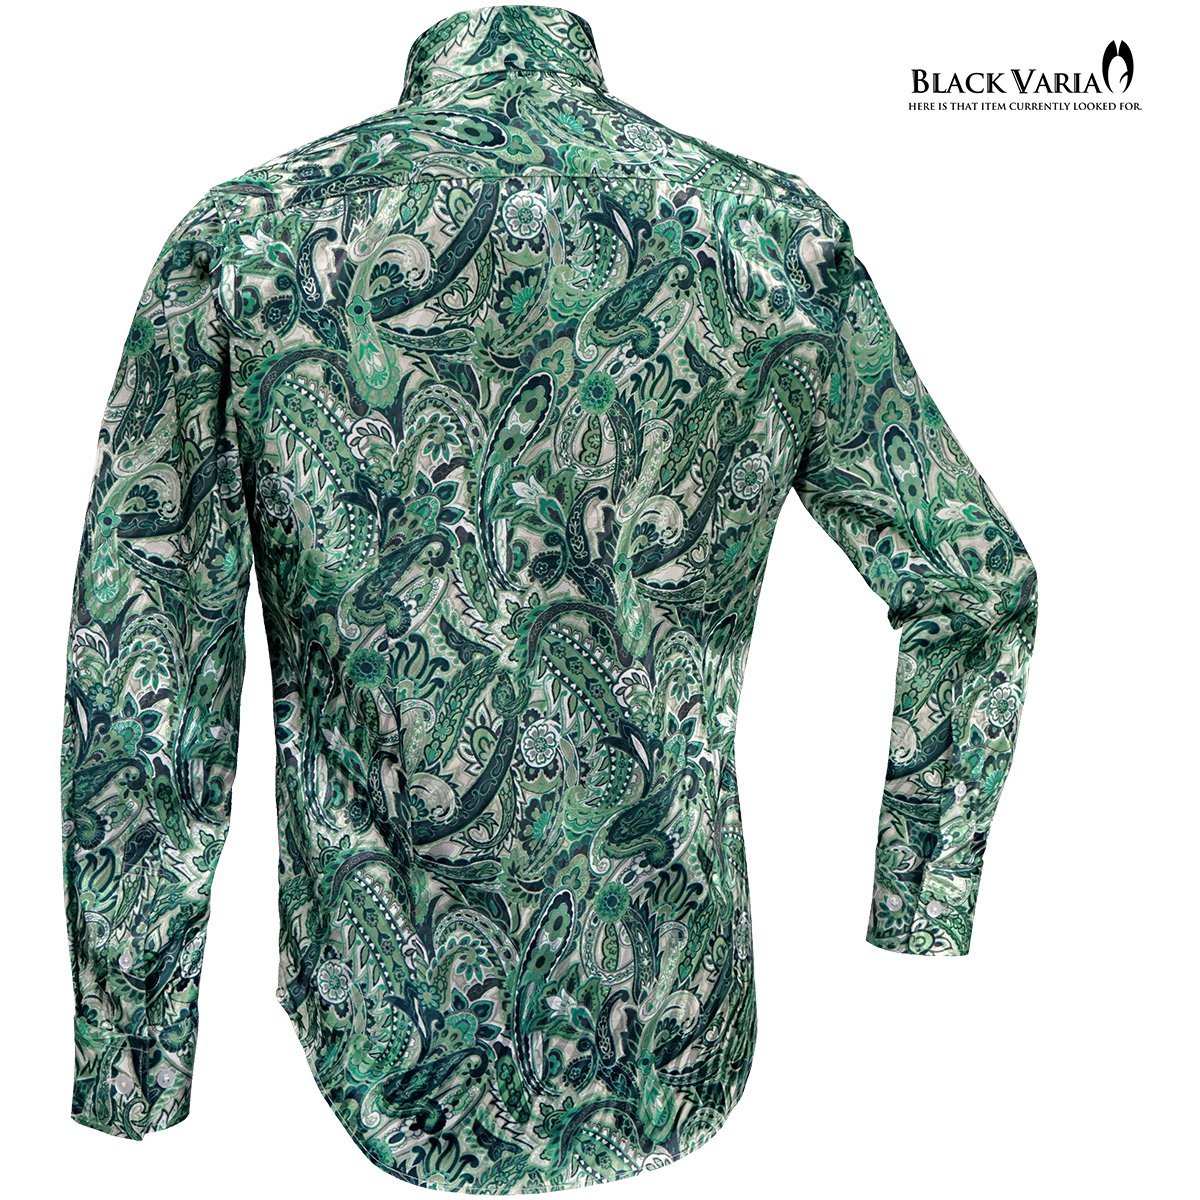 a231902-gr BlackVaria サテンシャツ ドゥエボットーニ ペイズリー柄 ドレスシャツ 長袖レギュラーカラー ジャガード メンズ(グリーン緑) L_画像3